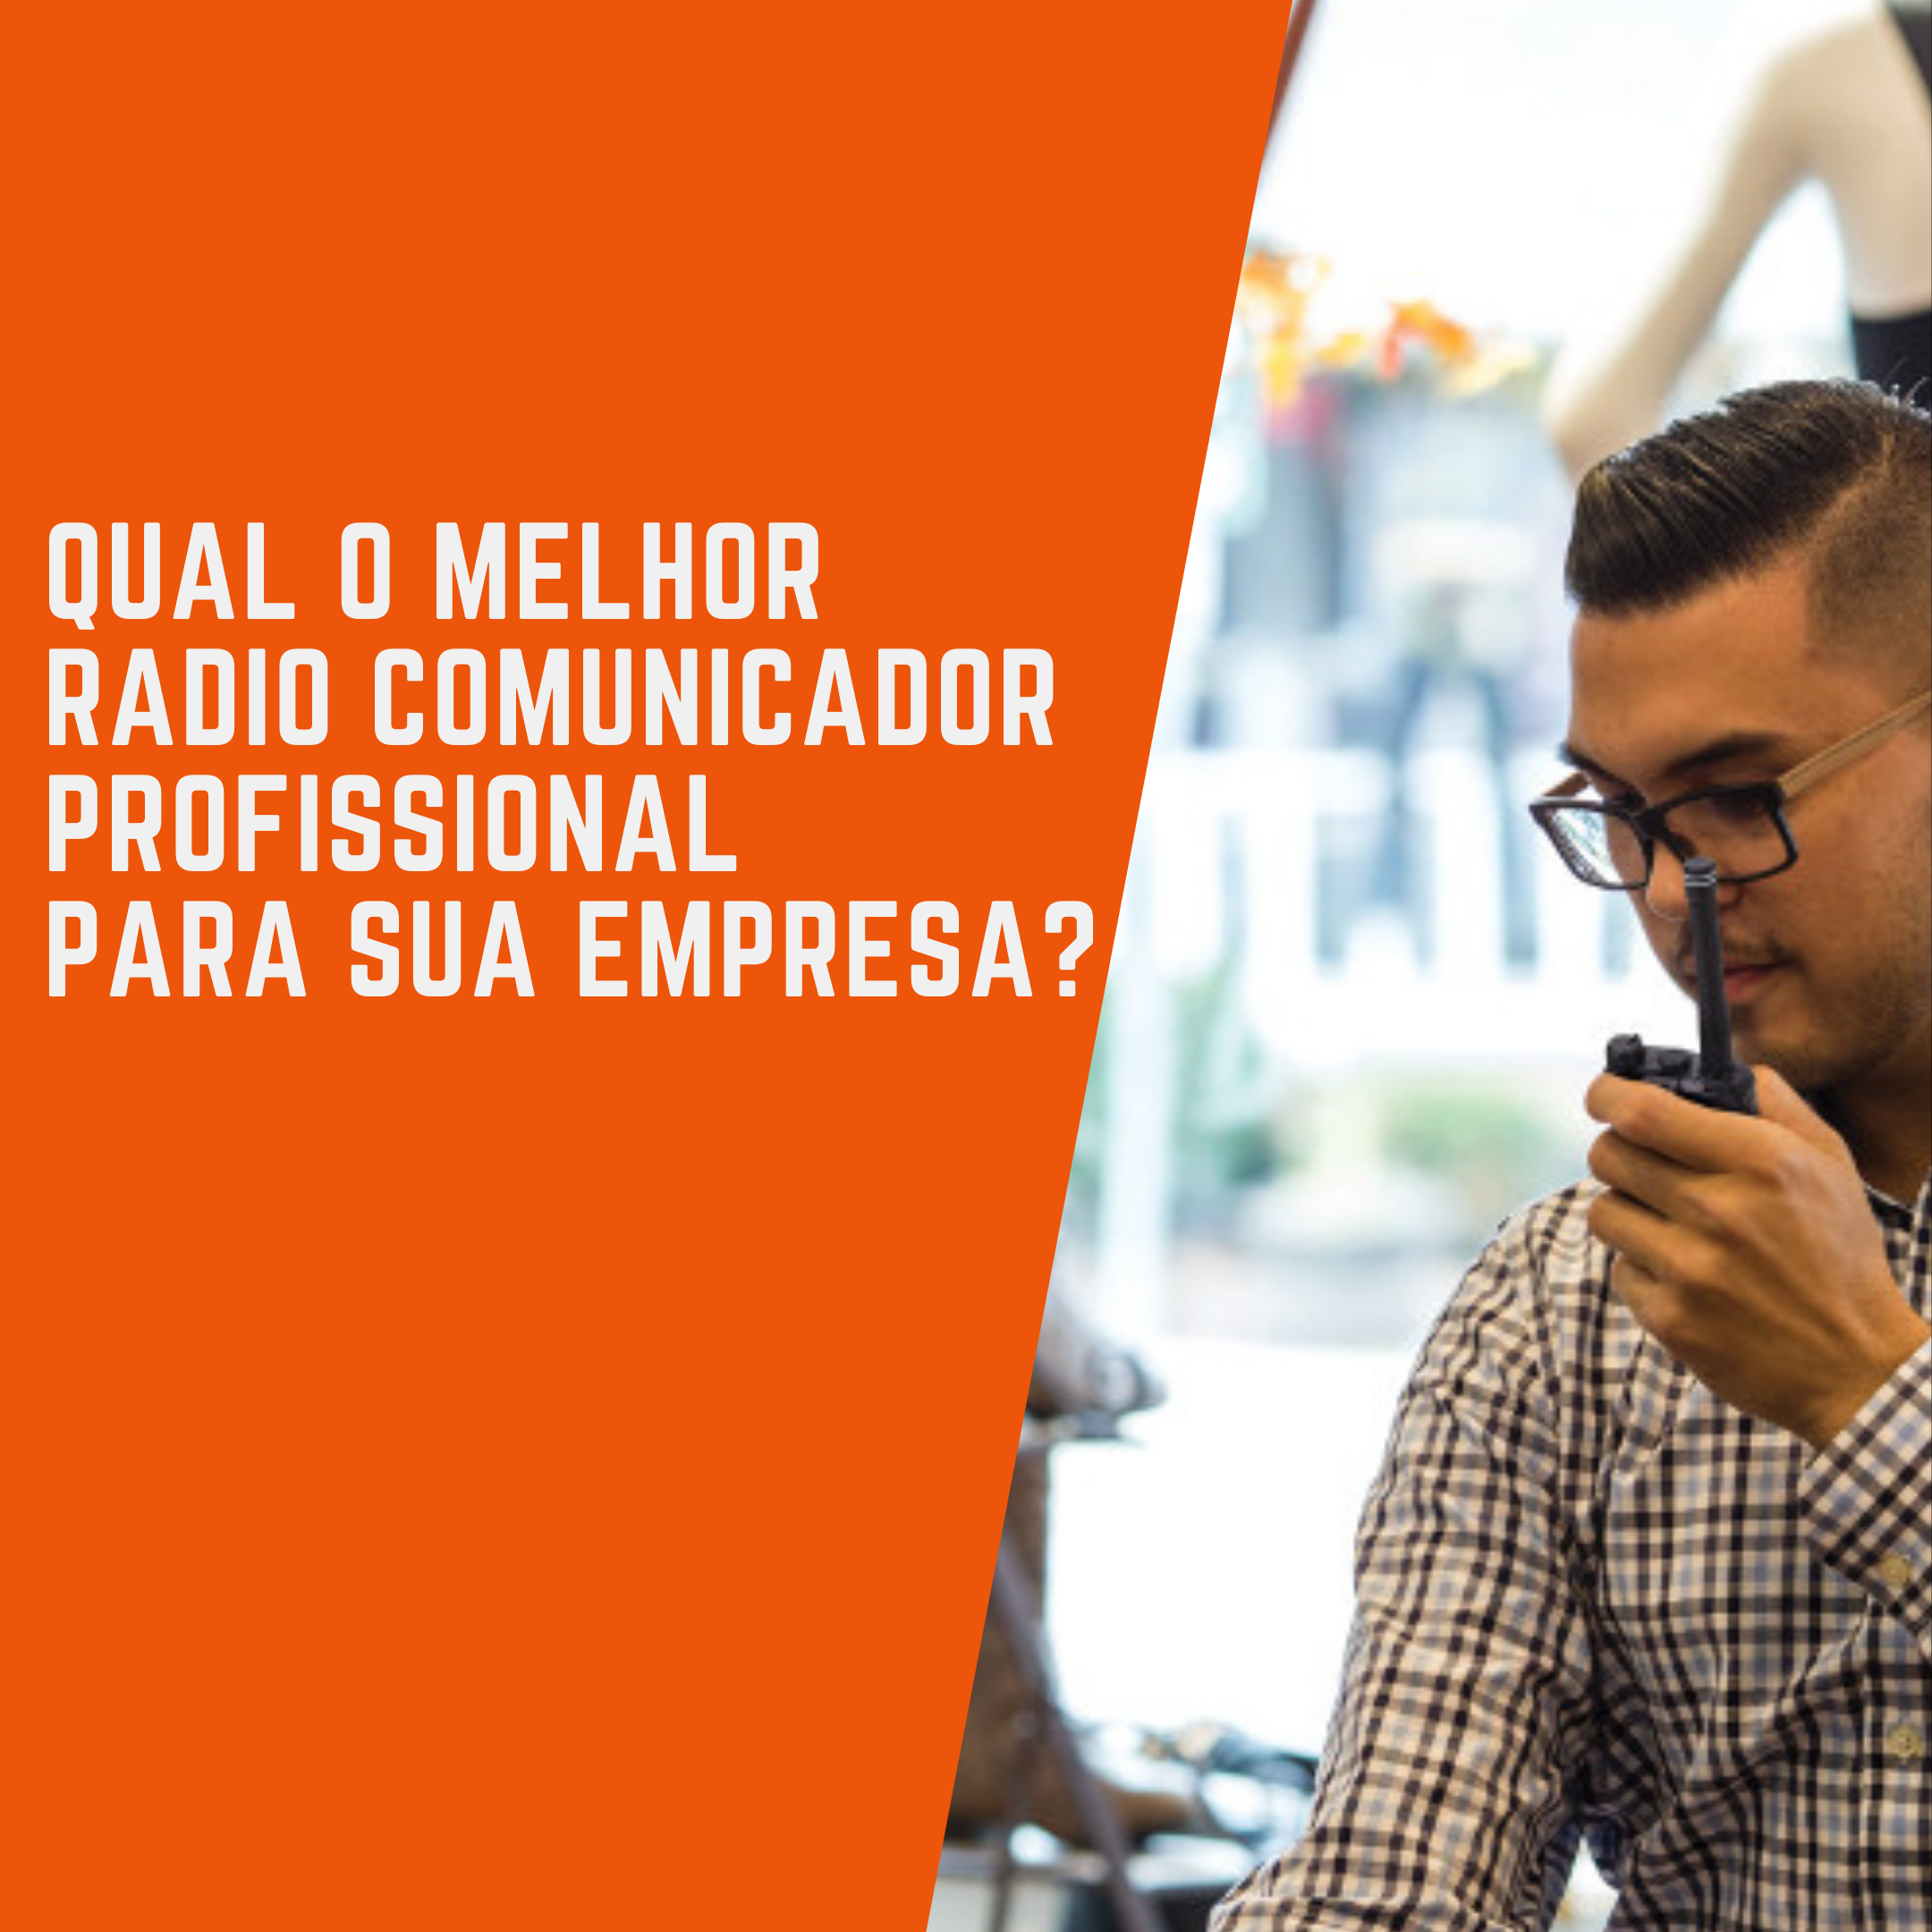 Radio comunicador profissional